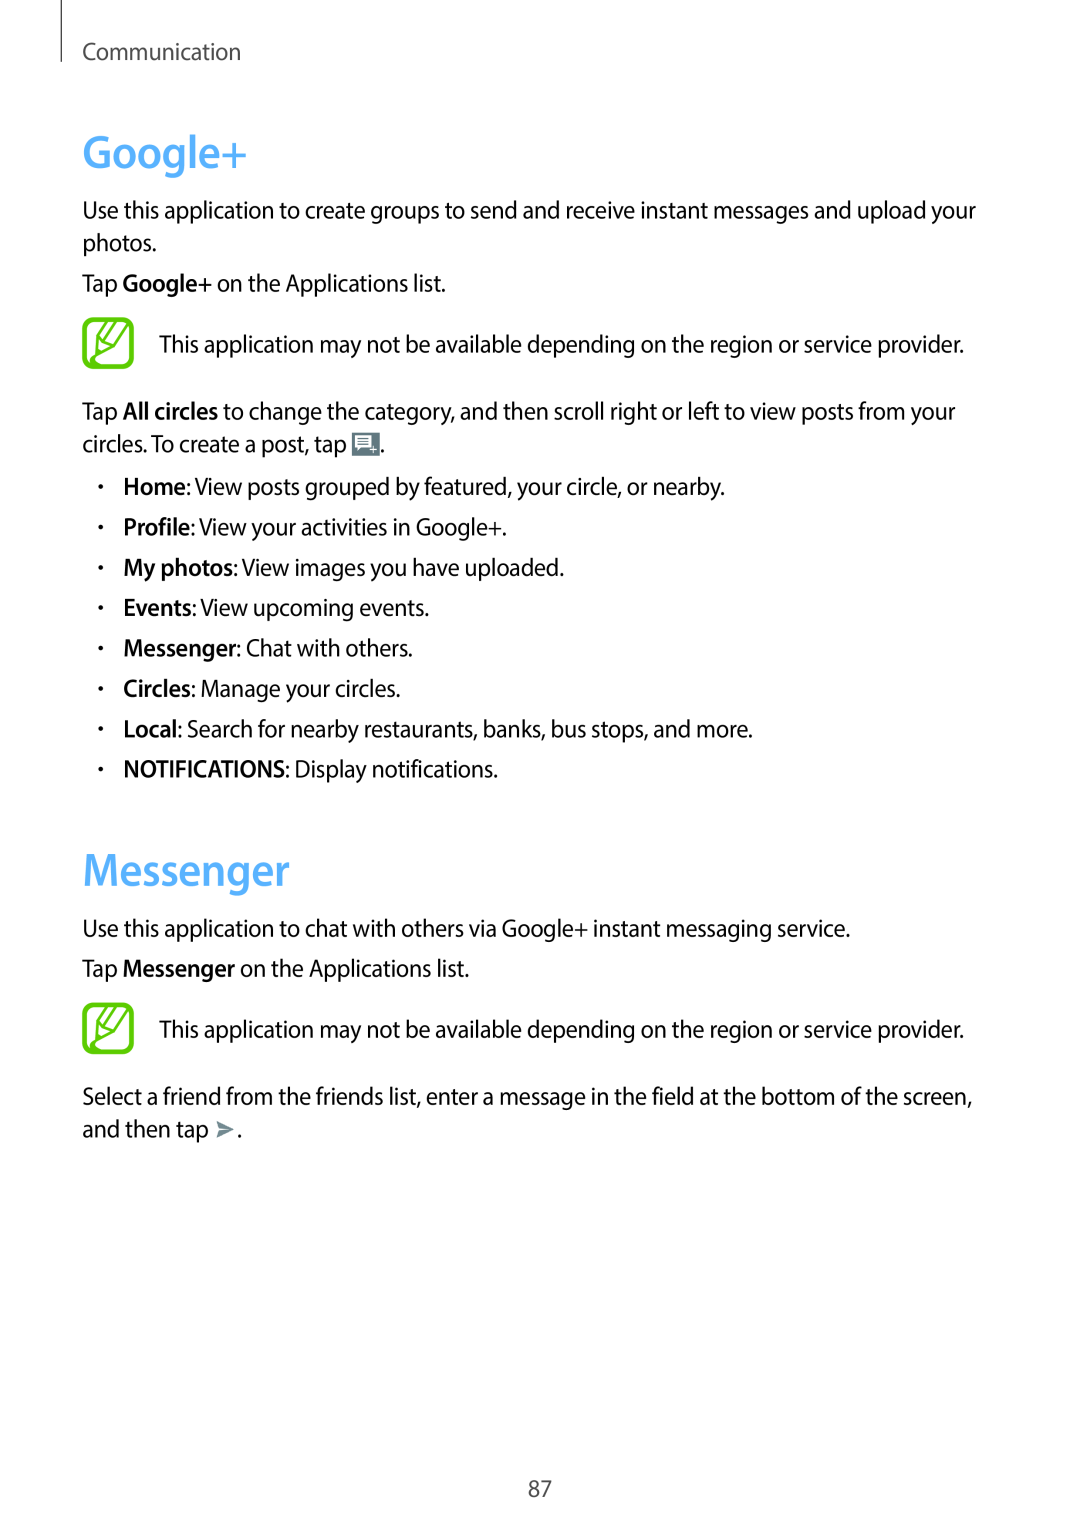 Samsung EK-GC100 user manual Google+, Messenger, Communication 